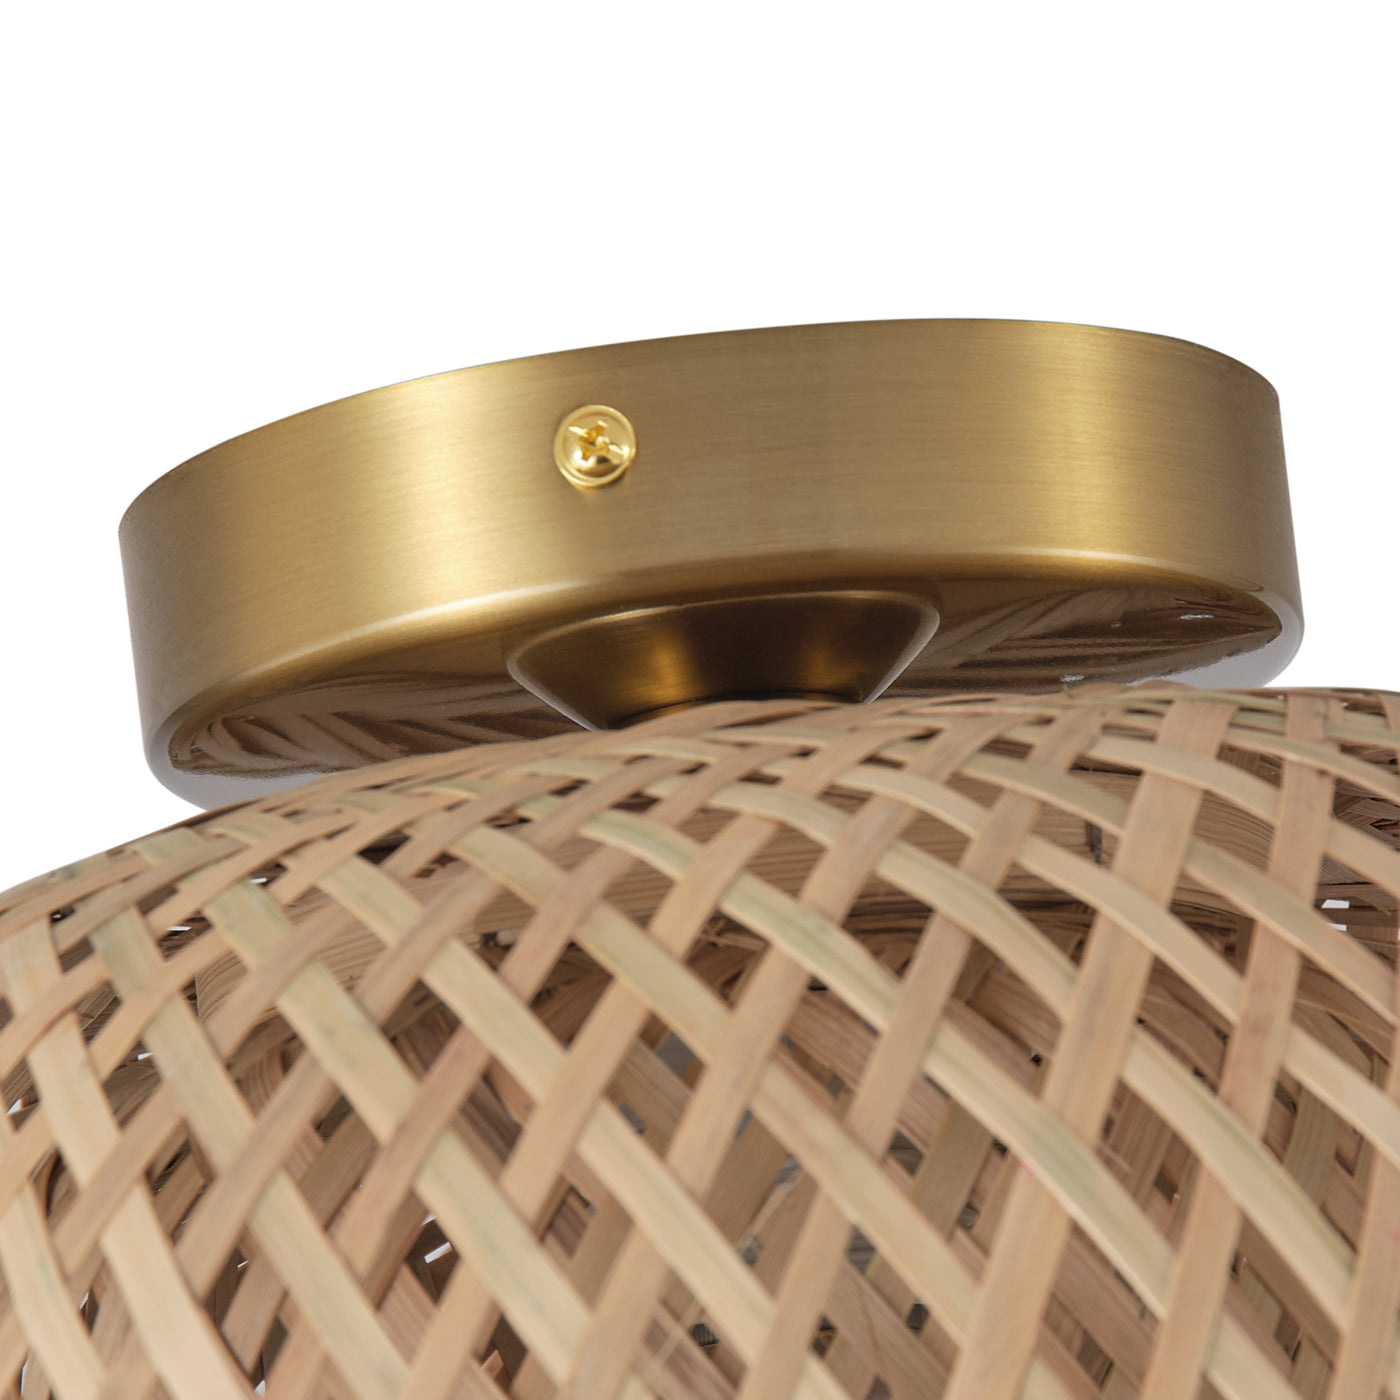 1-Light Bamboo Basket Round Shape Openwork Design Semi-Flush Mount Lighting